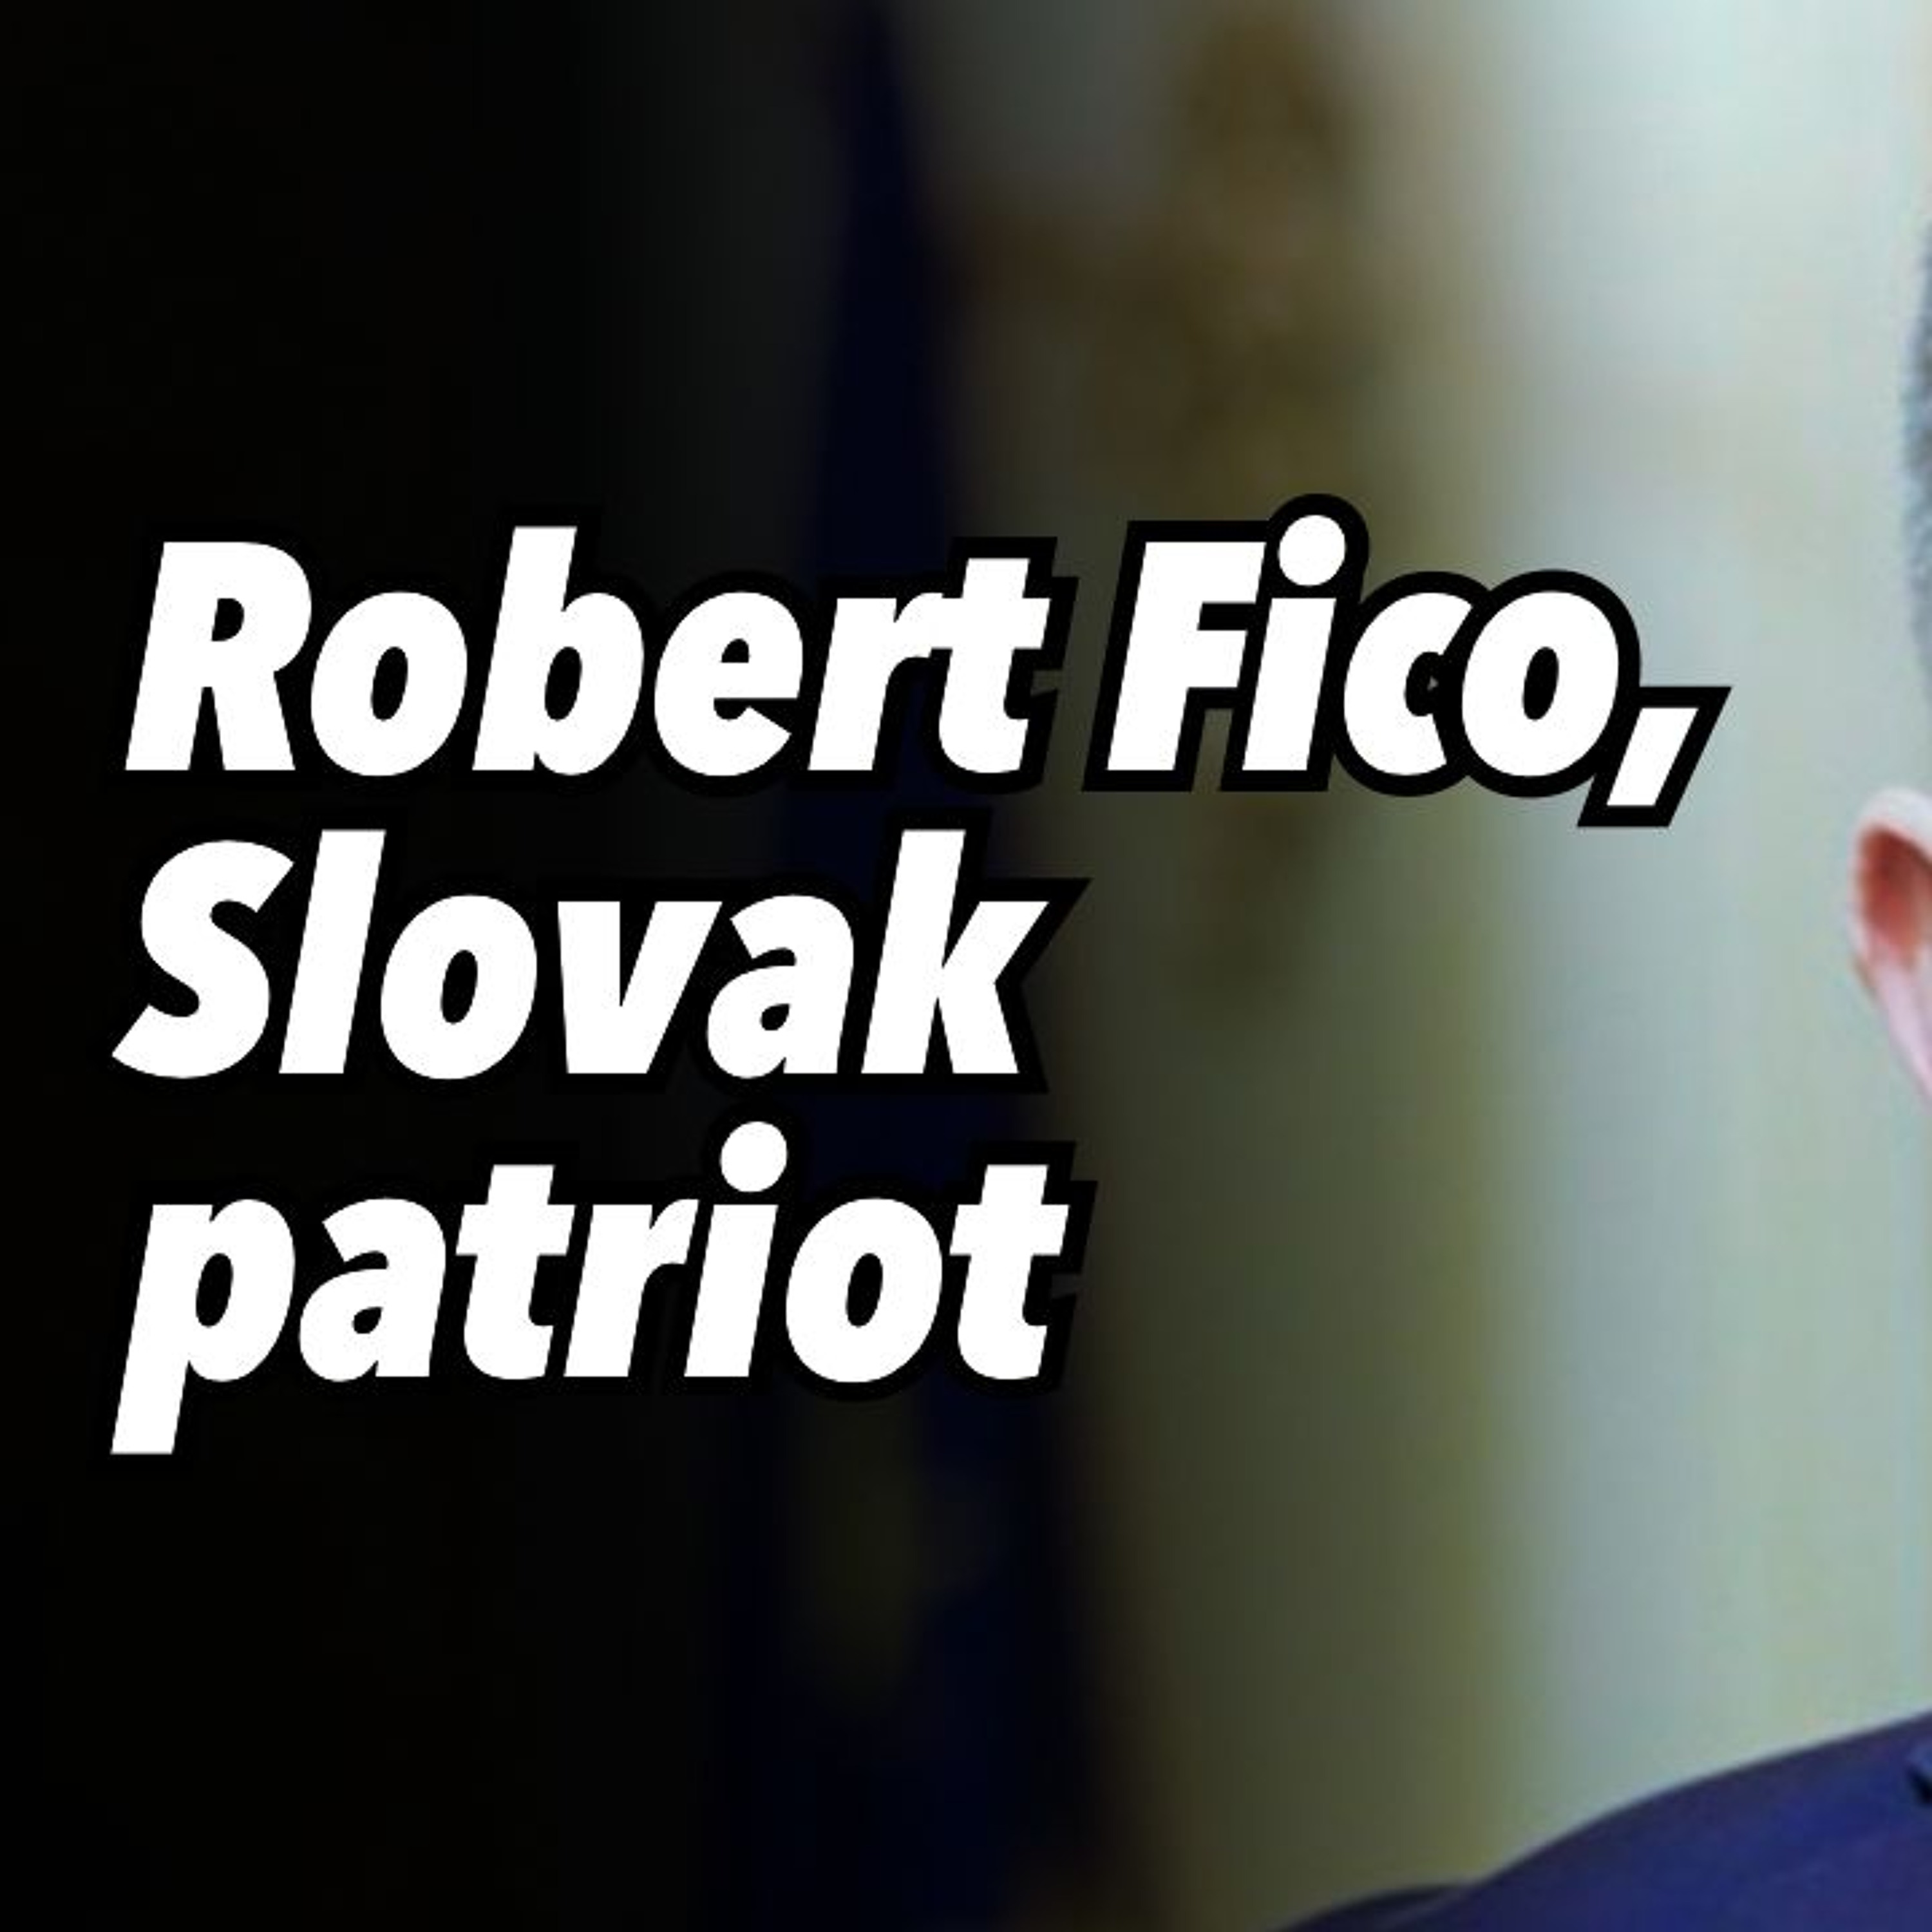 Robert Fico, Slovak patriot